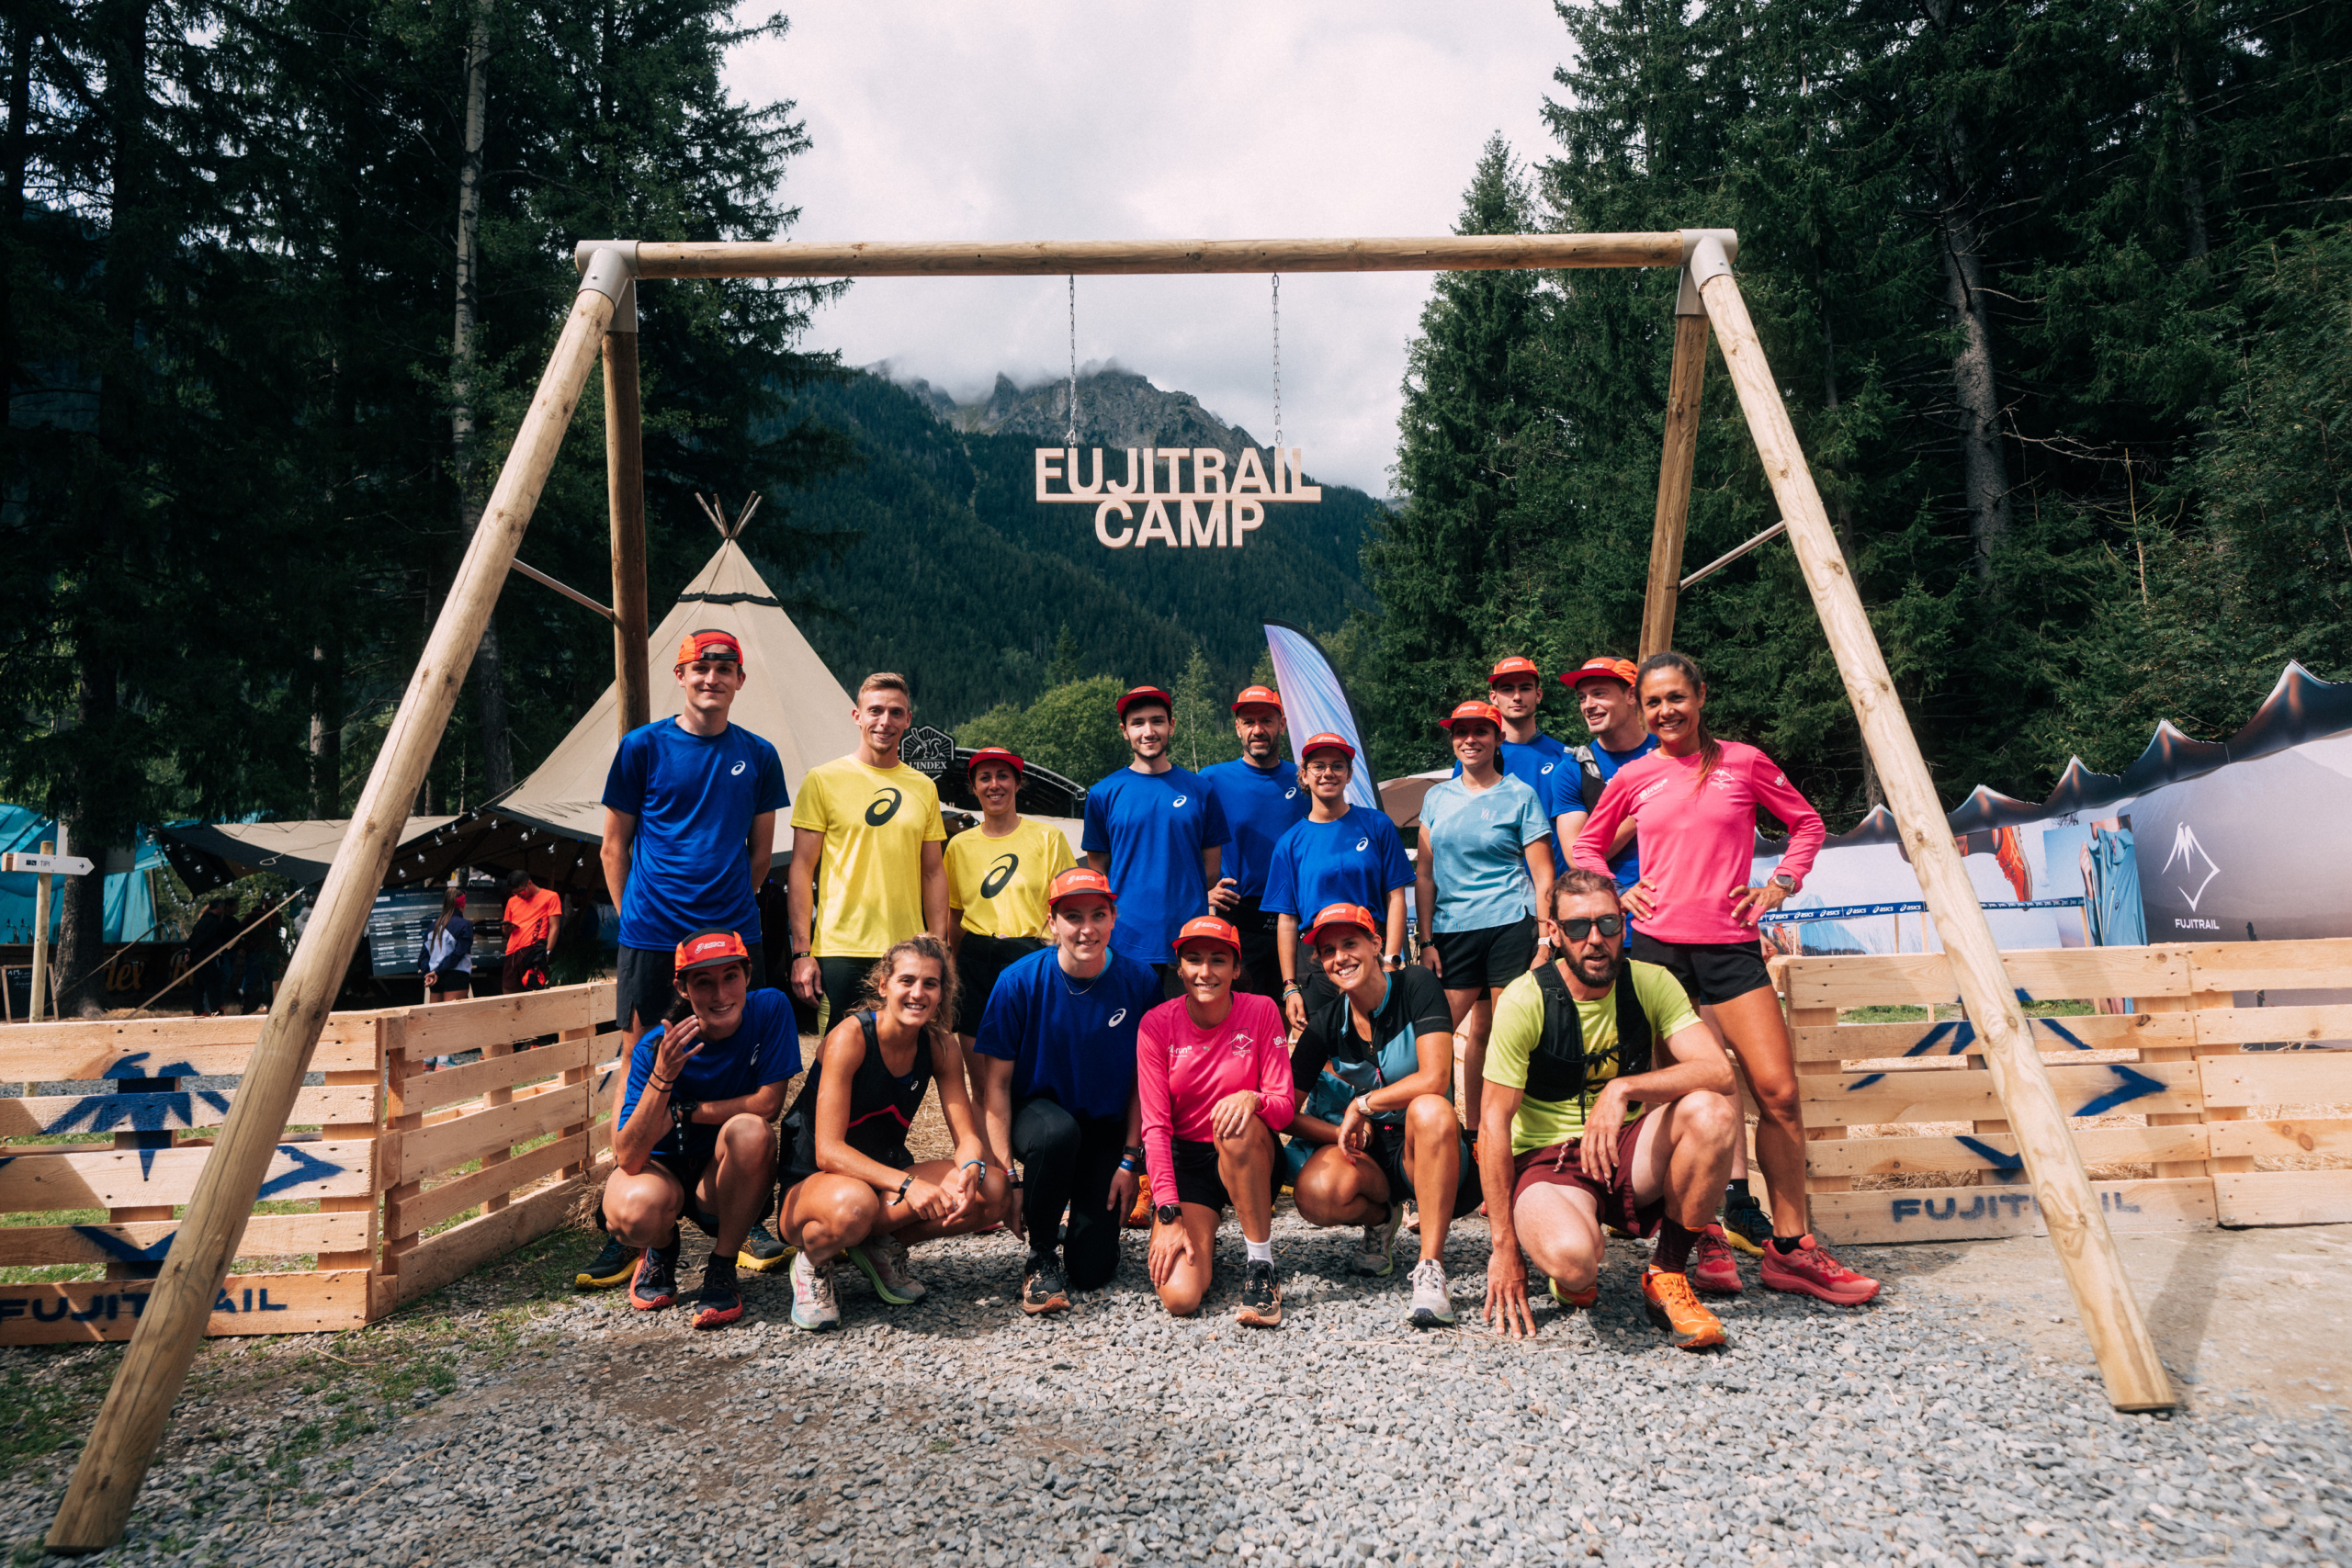 Fuji Trail Camp Asics